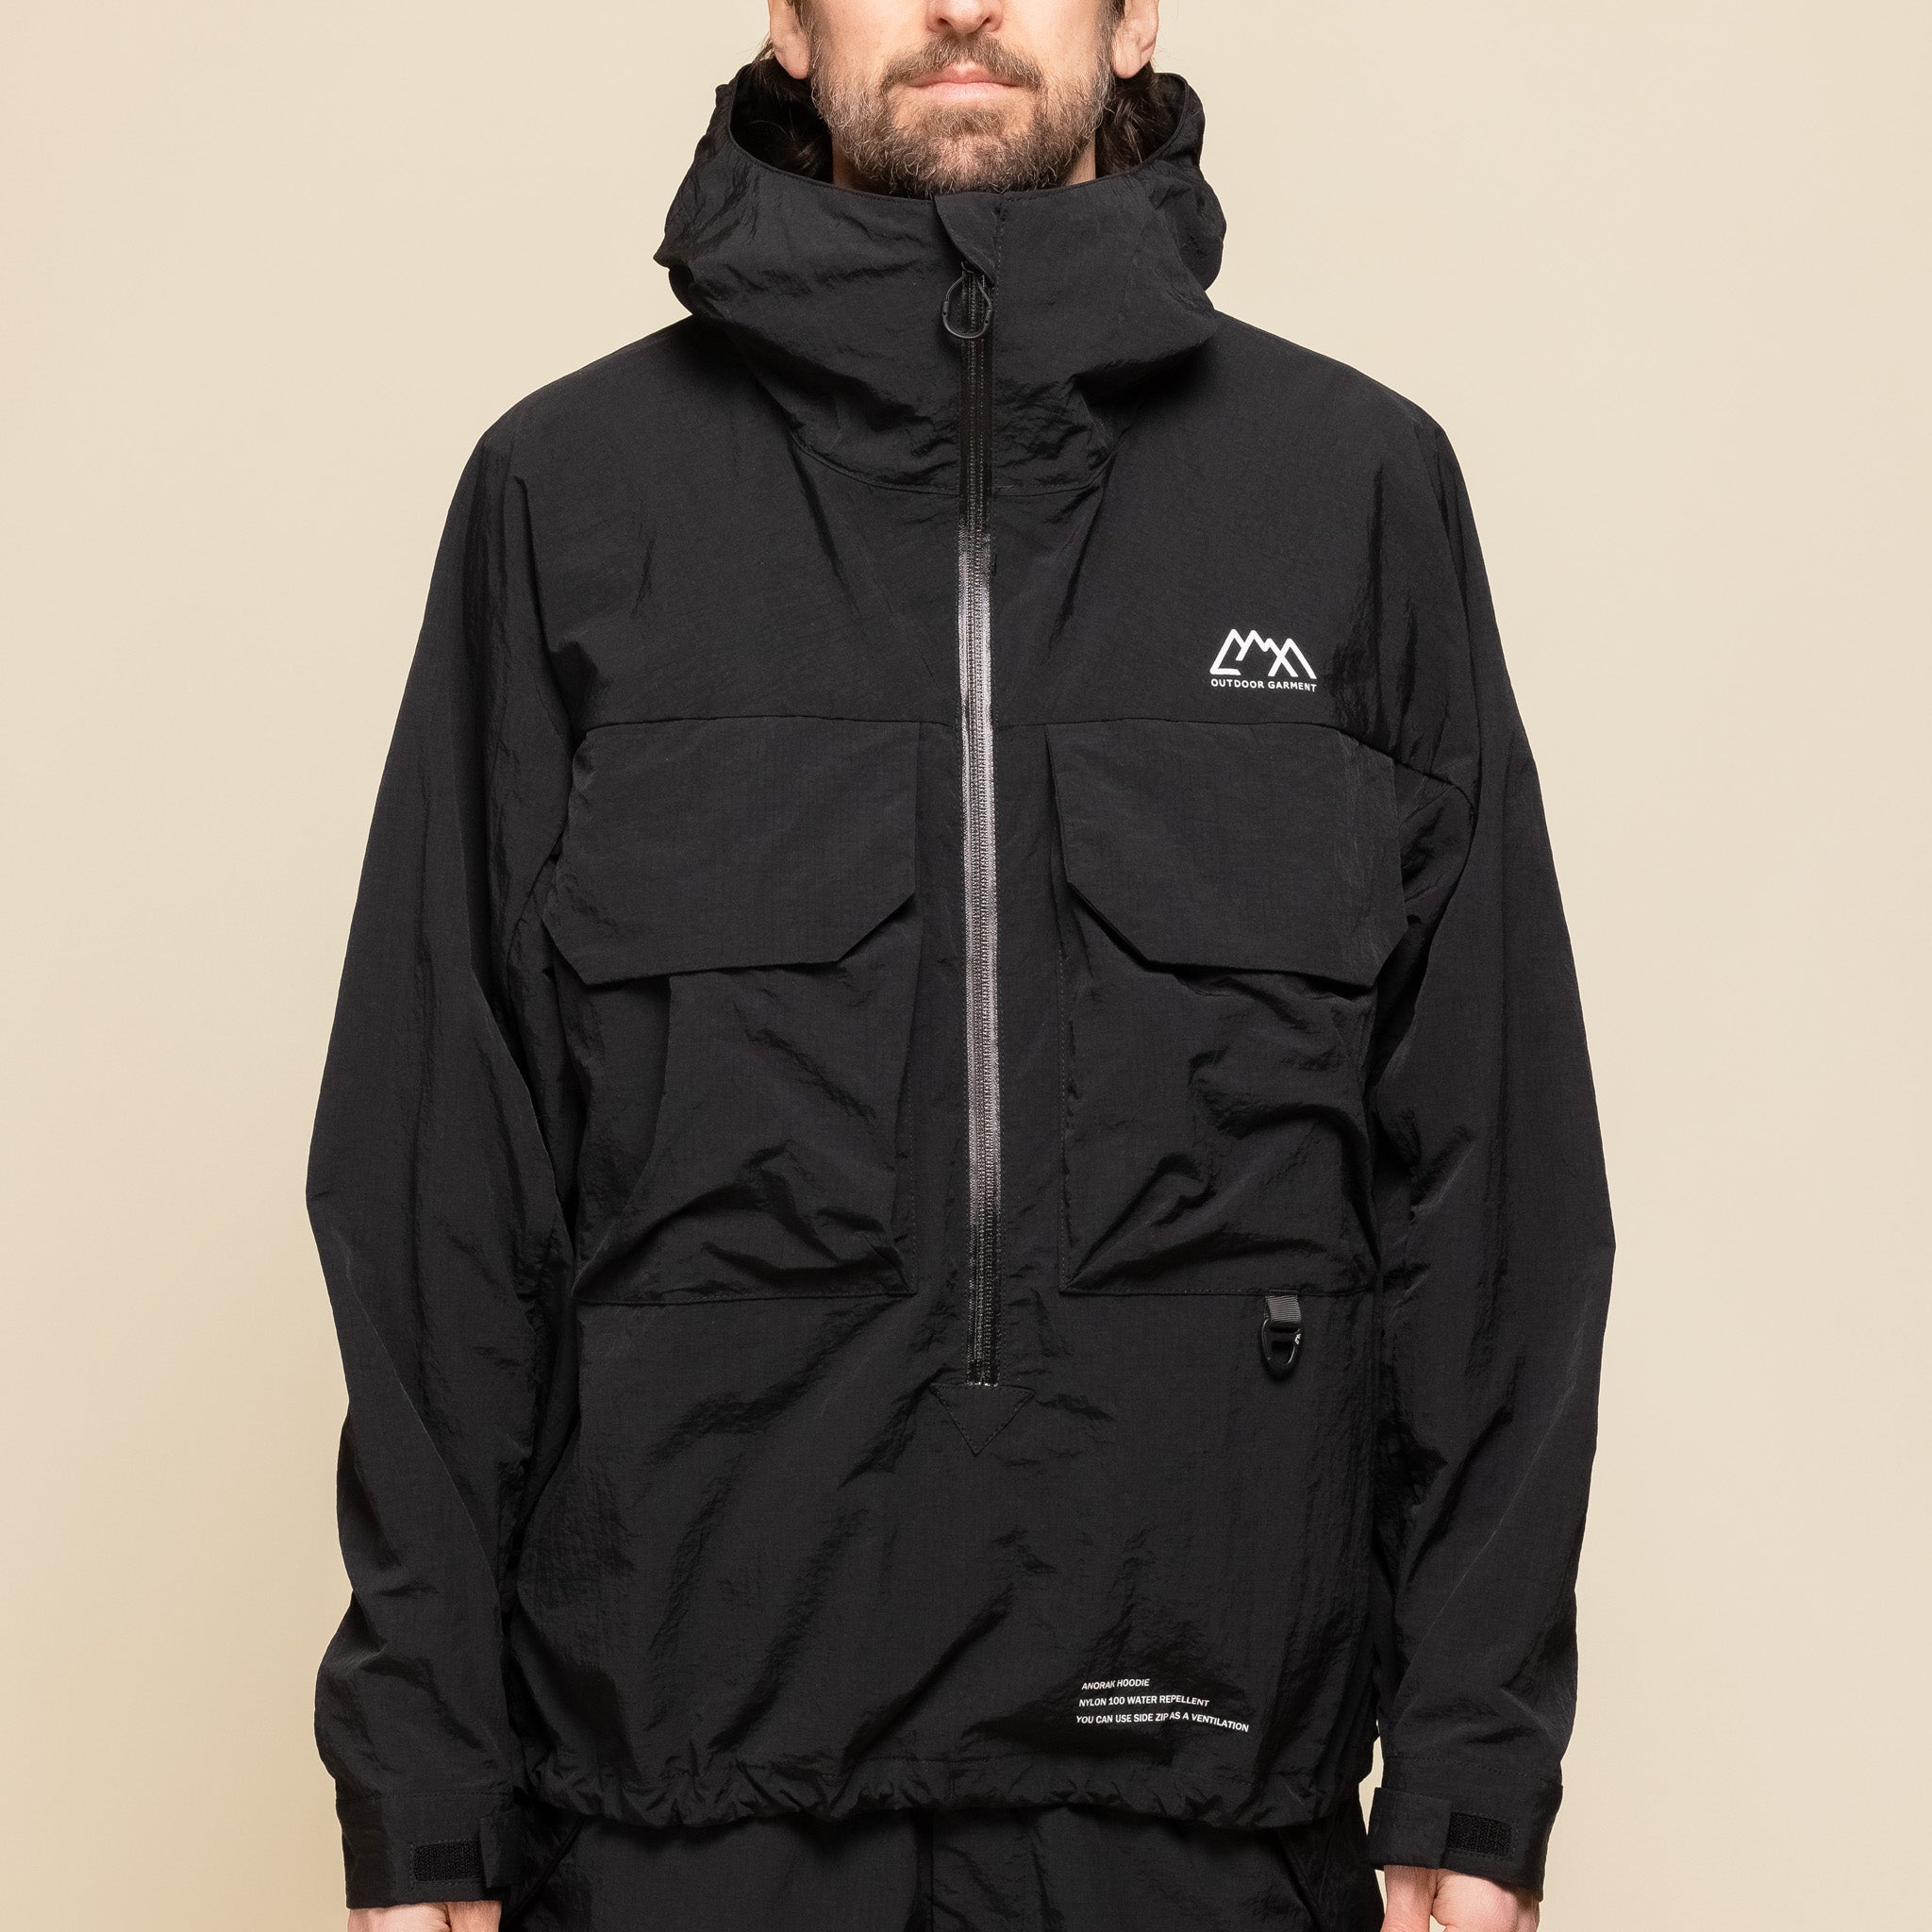 CMF Comfy Outdoor Garment - Anorak Hoodie Jacket - Black